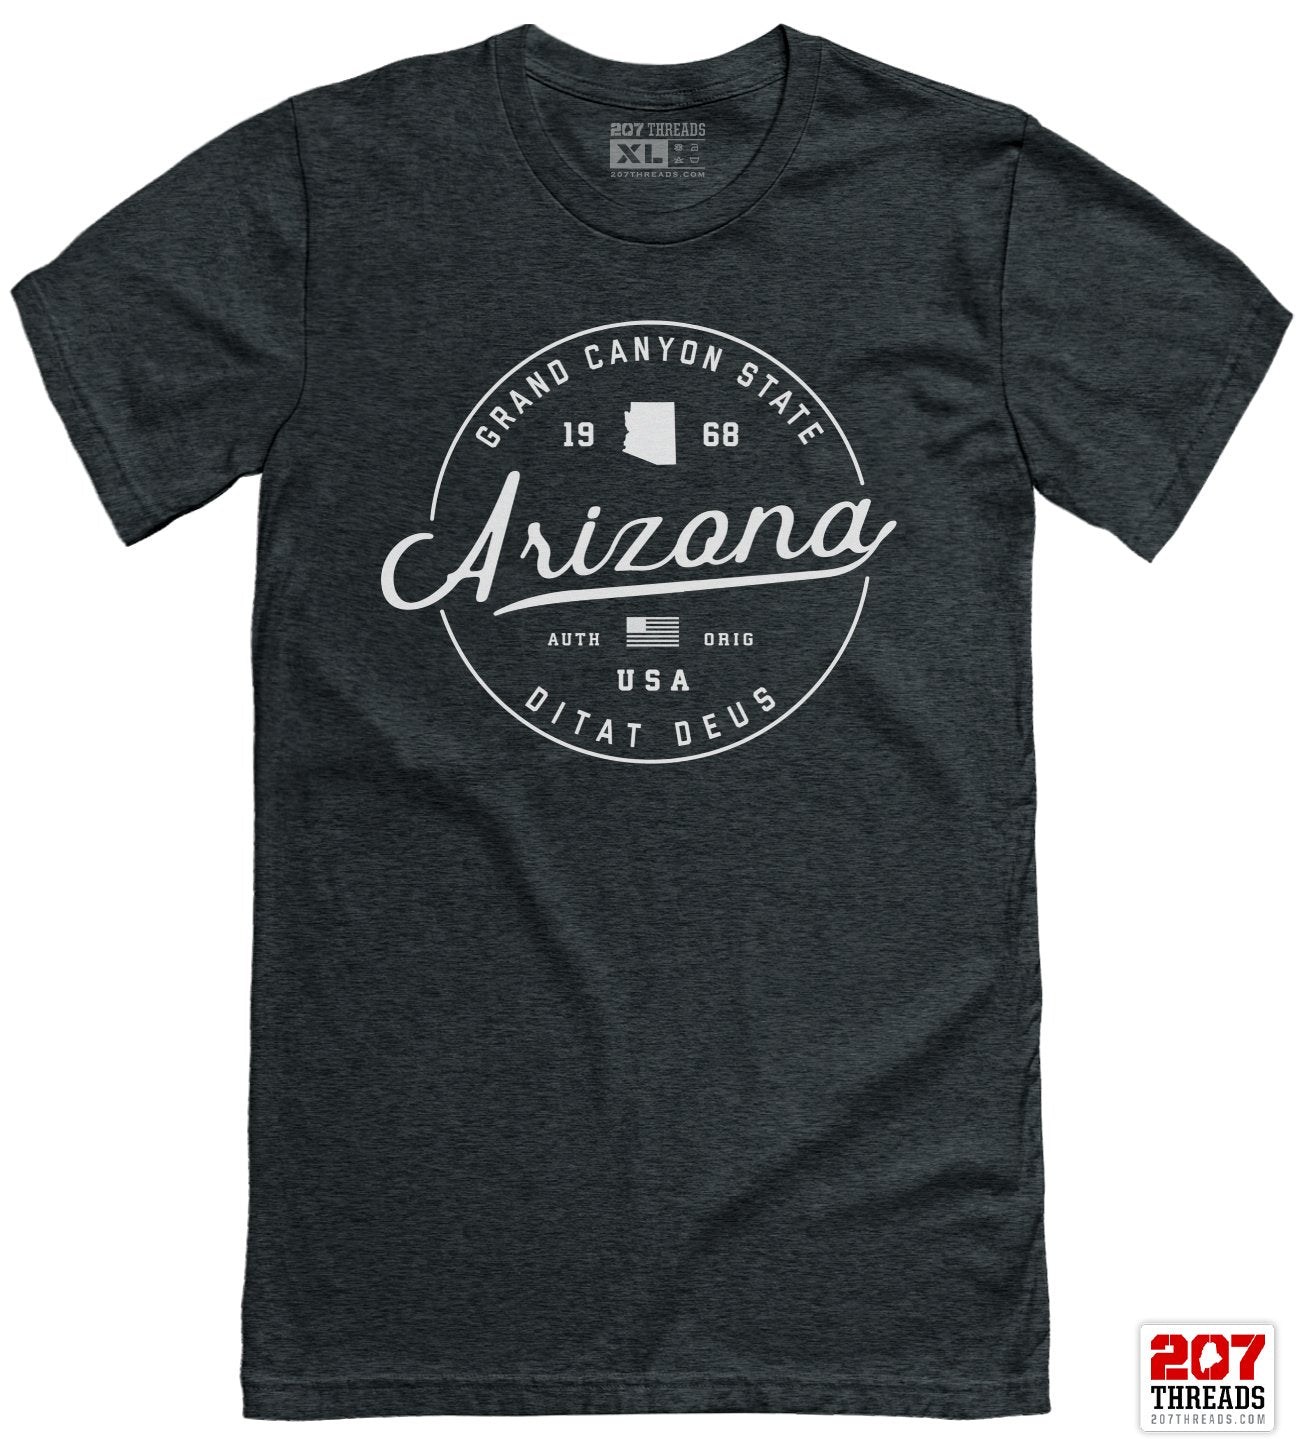 State of Arizona T-Shirt - Soft Arizona Tee